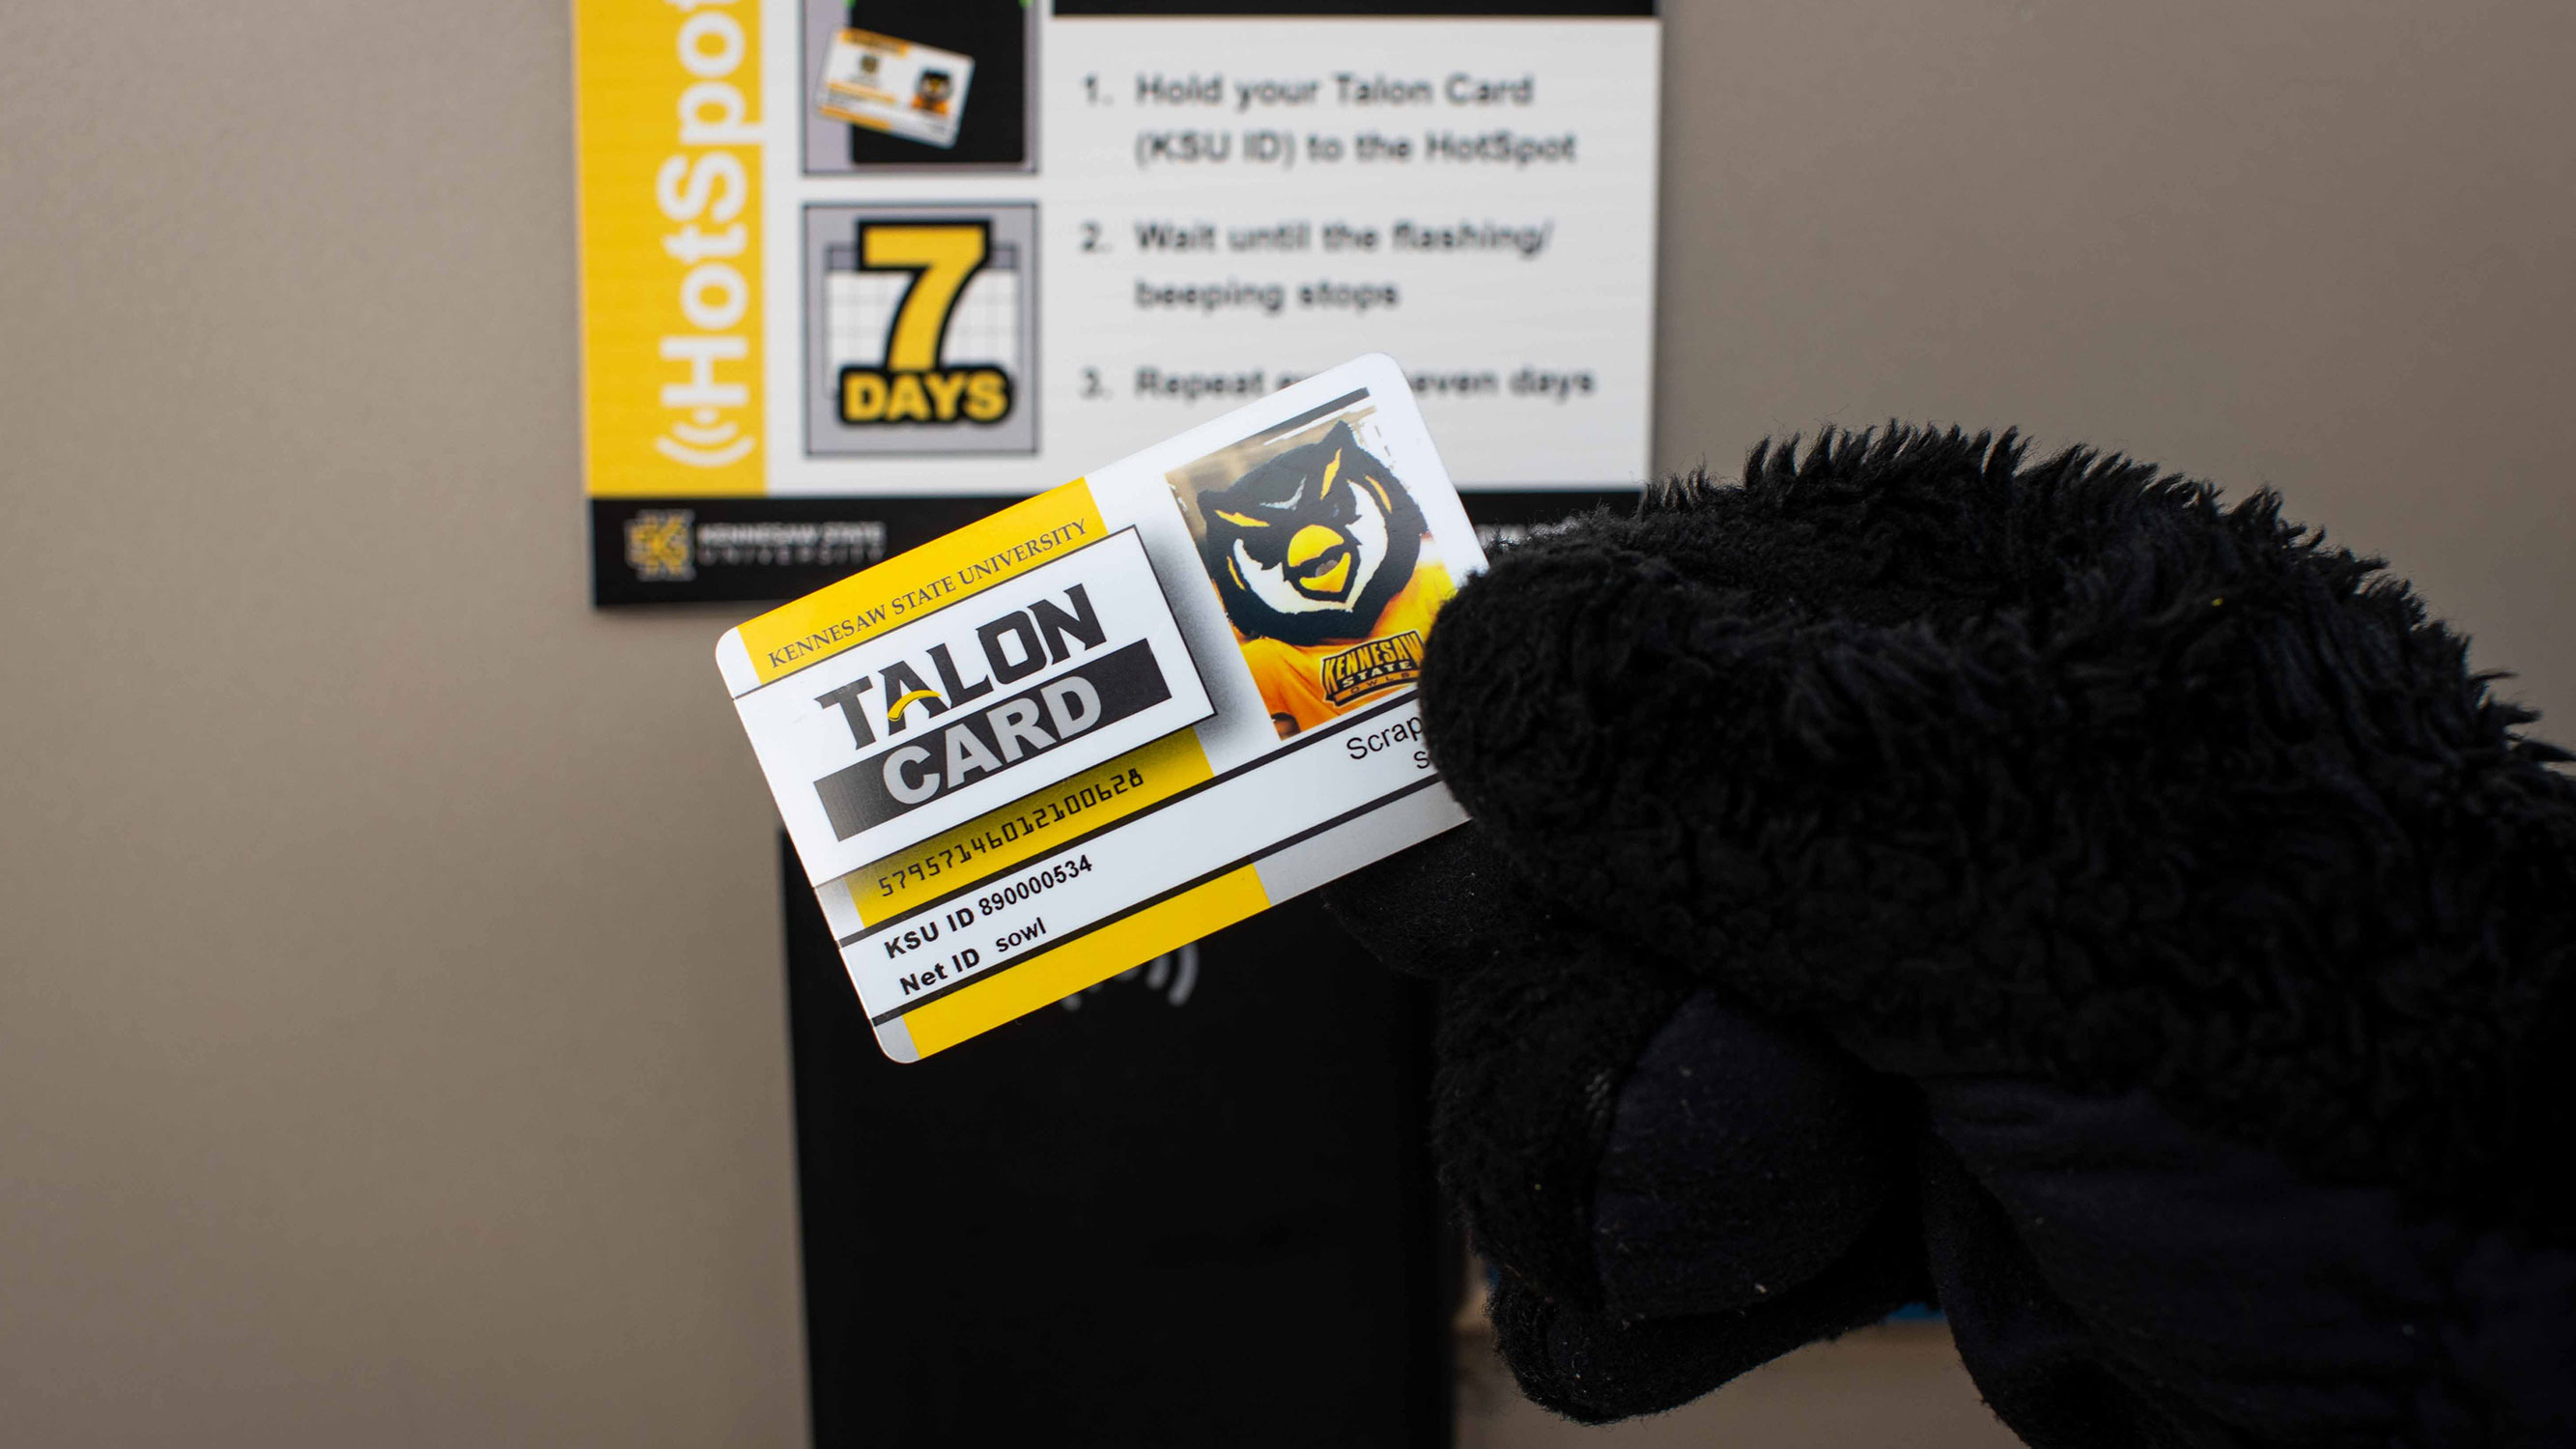 Scrappy updating his Talon Card at a HotSpot